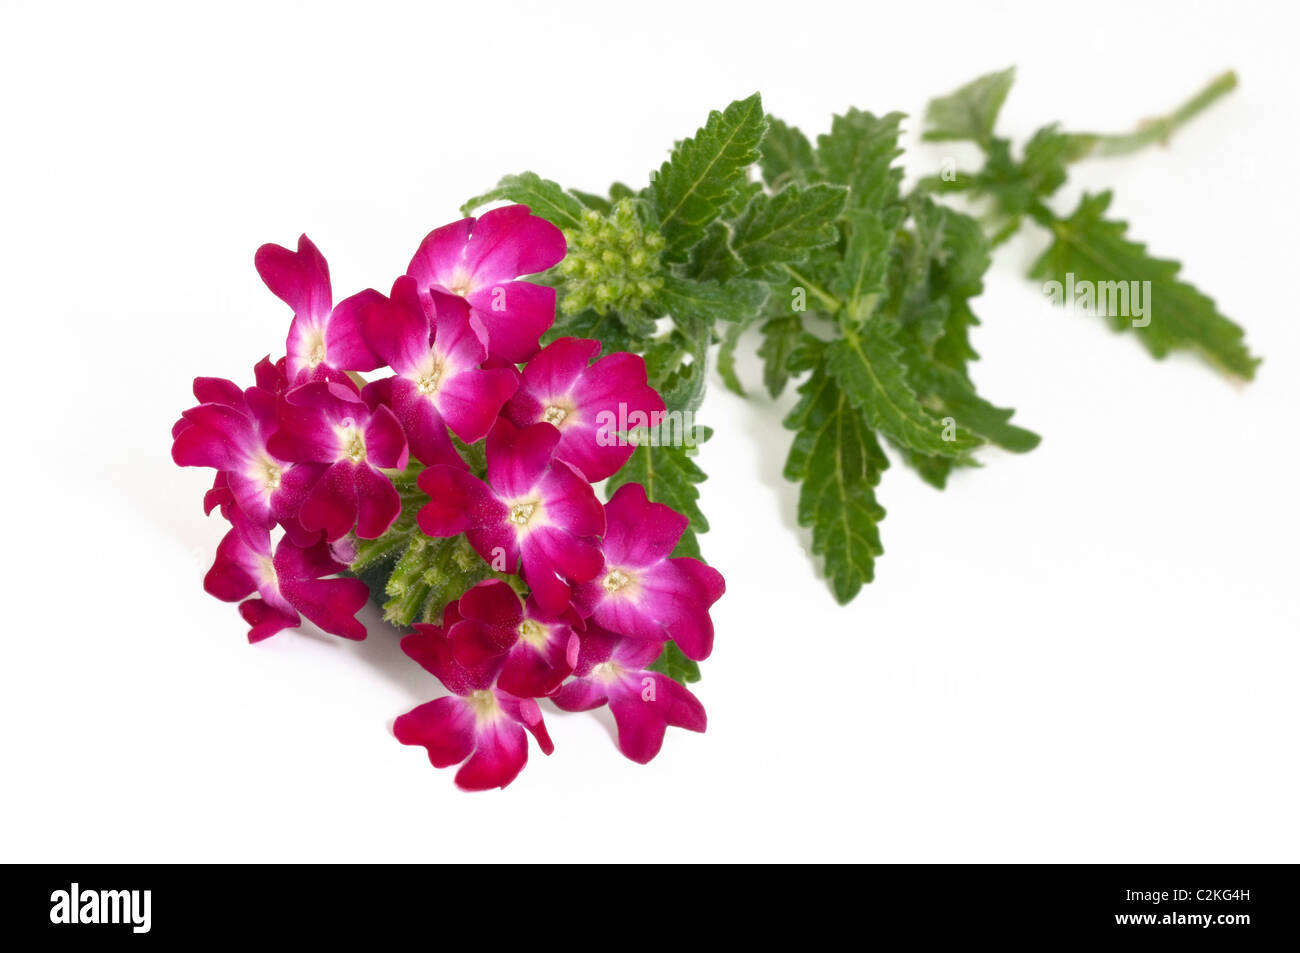 Garden Verbena, Garden Vervain (Verbenax hybrida), flowering stem, studio picture against a white background. Stock Photo